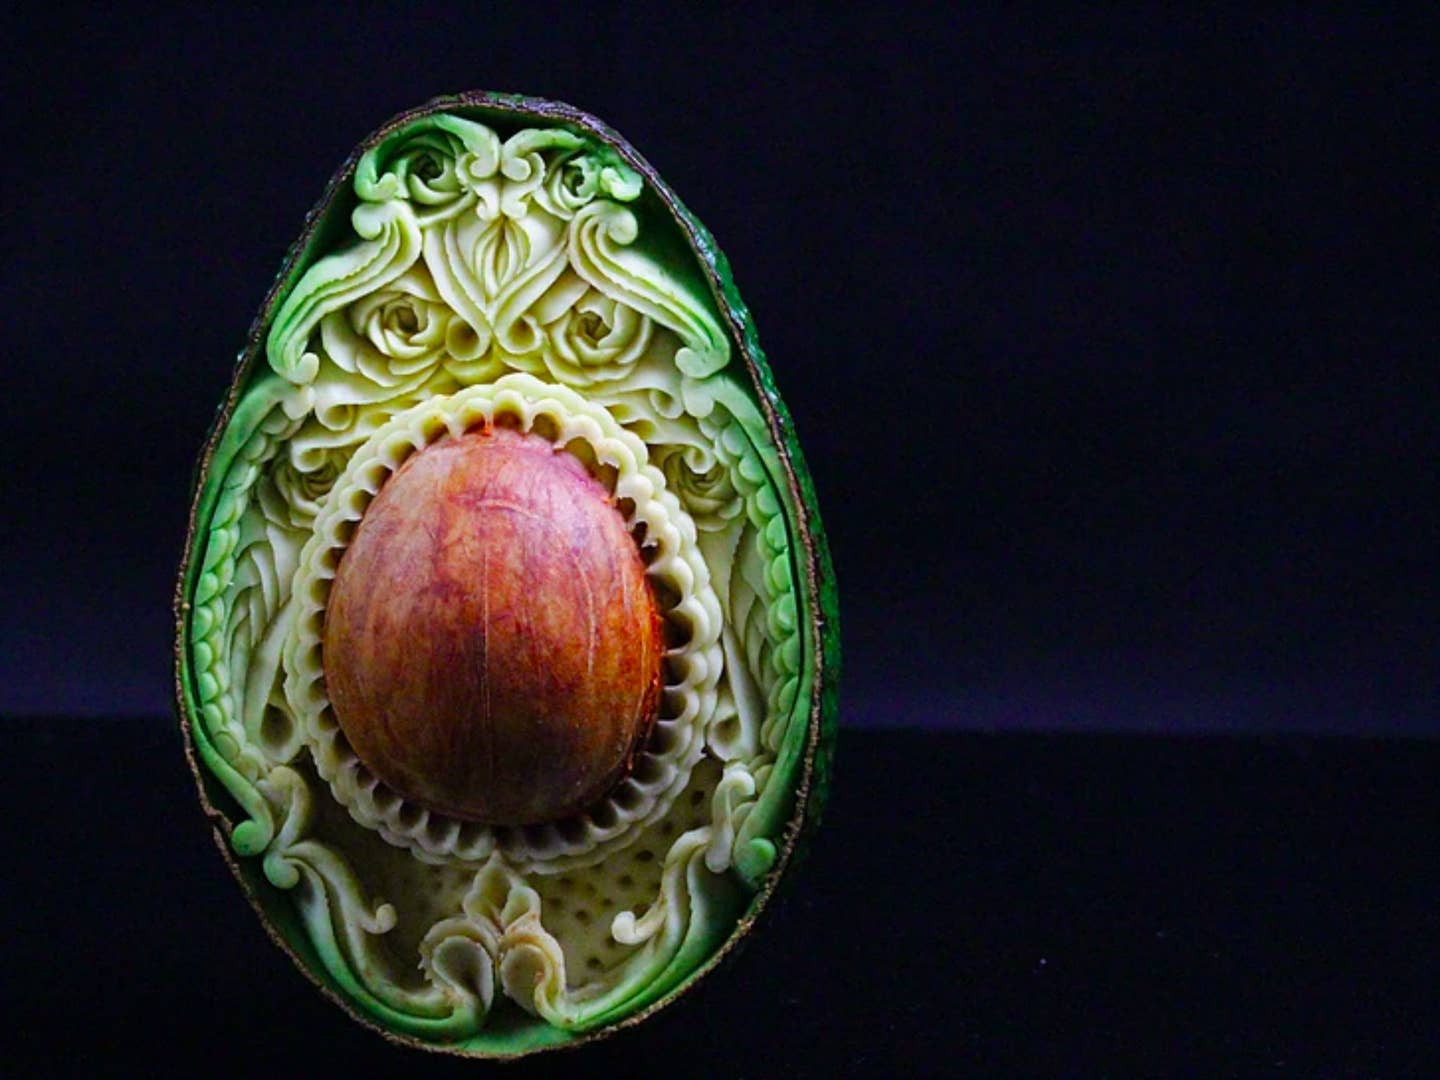 Italian Artist Turns Ordinary Foods Into Intricate Works of Art